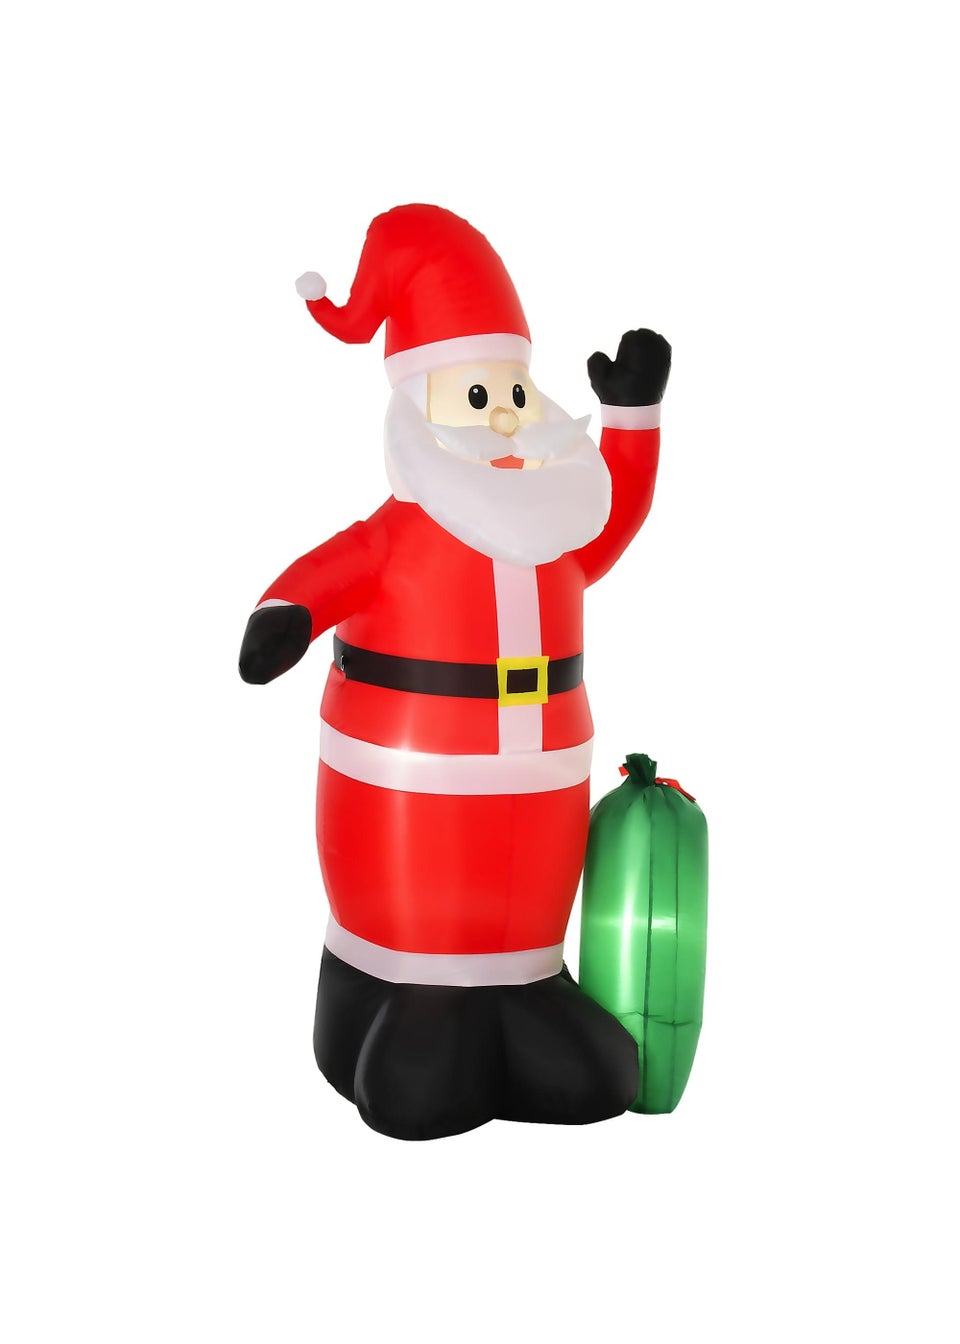 HOMCOM 7.5ft Inflatable Christmas Santa Claus